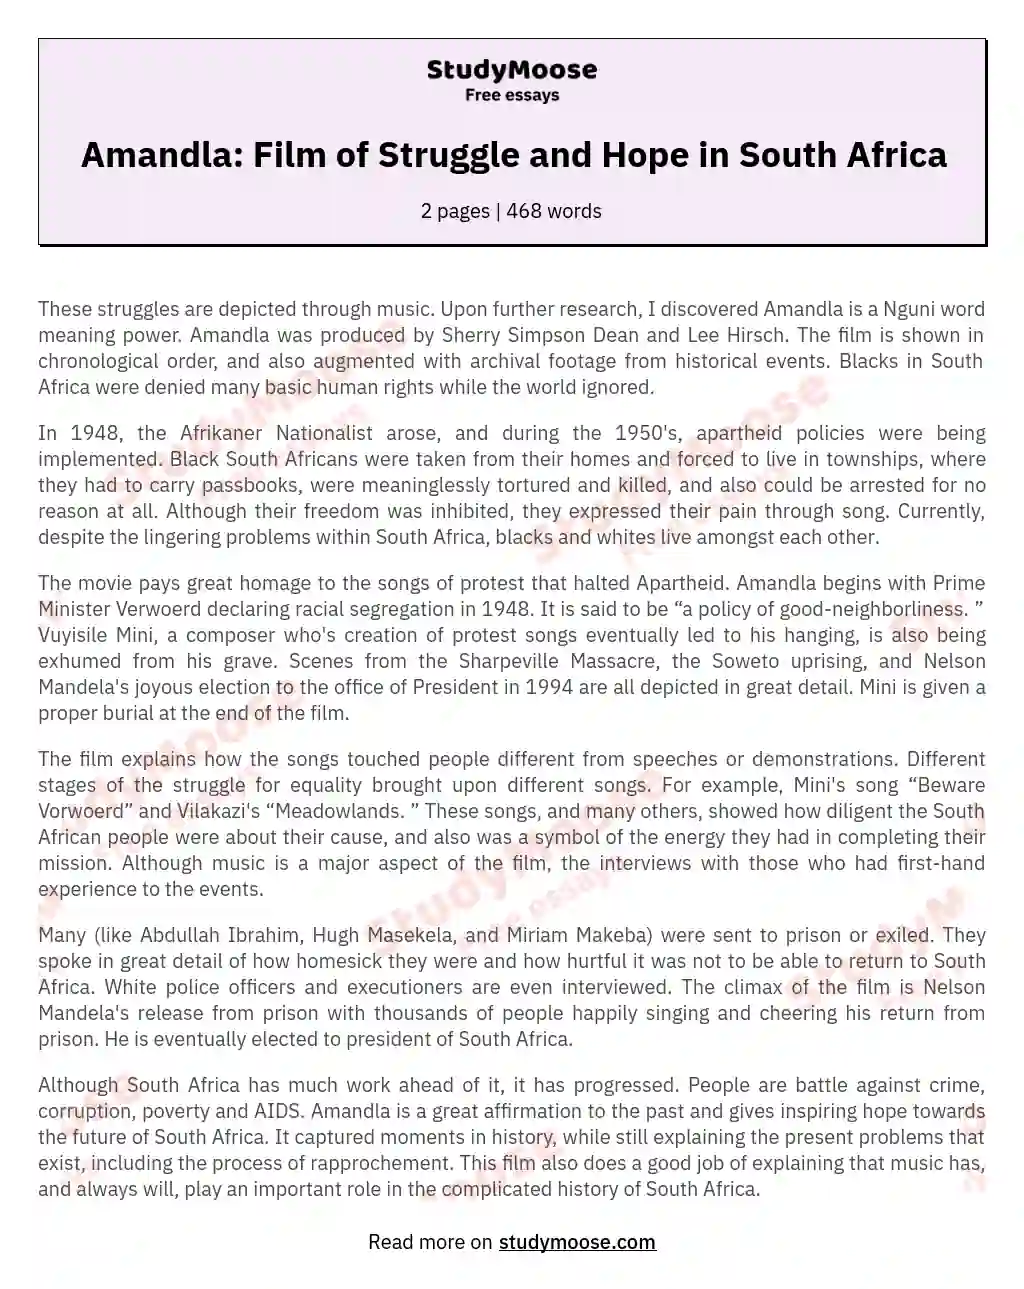 Amandla: Film of Struggle and Hope in South Africa essay